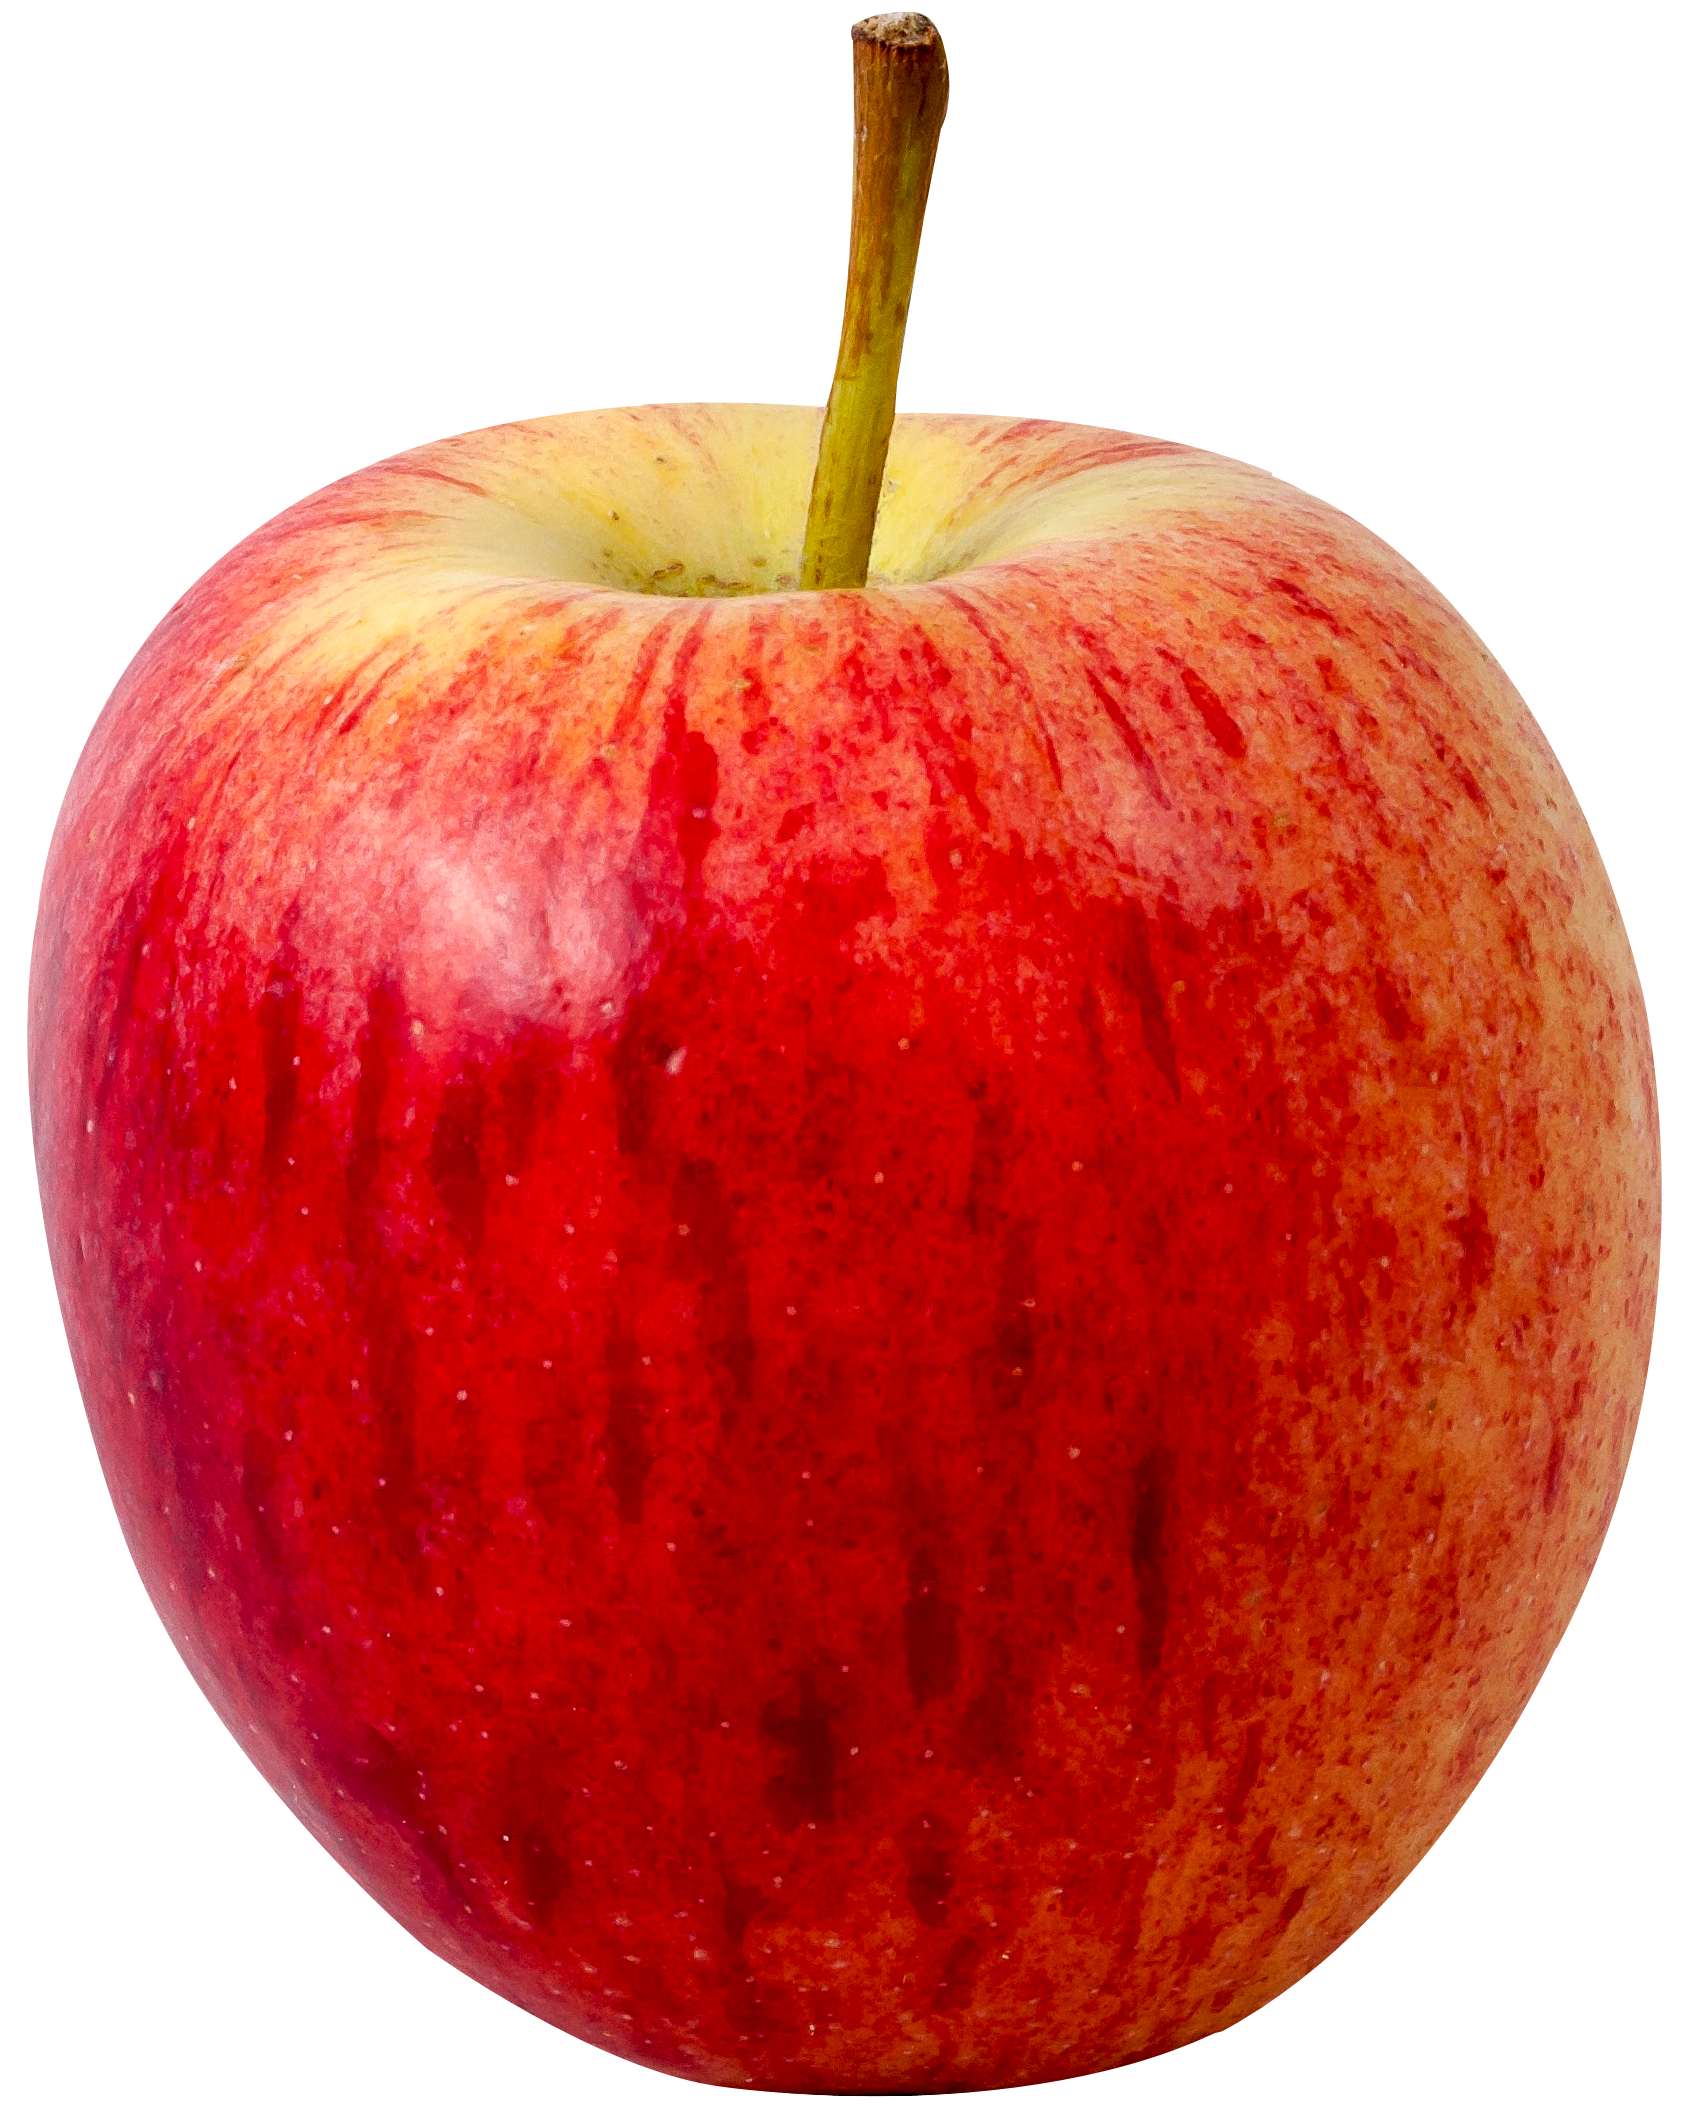 Details Apple Fruit Background Abzlocal Mx